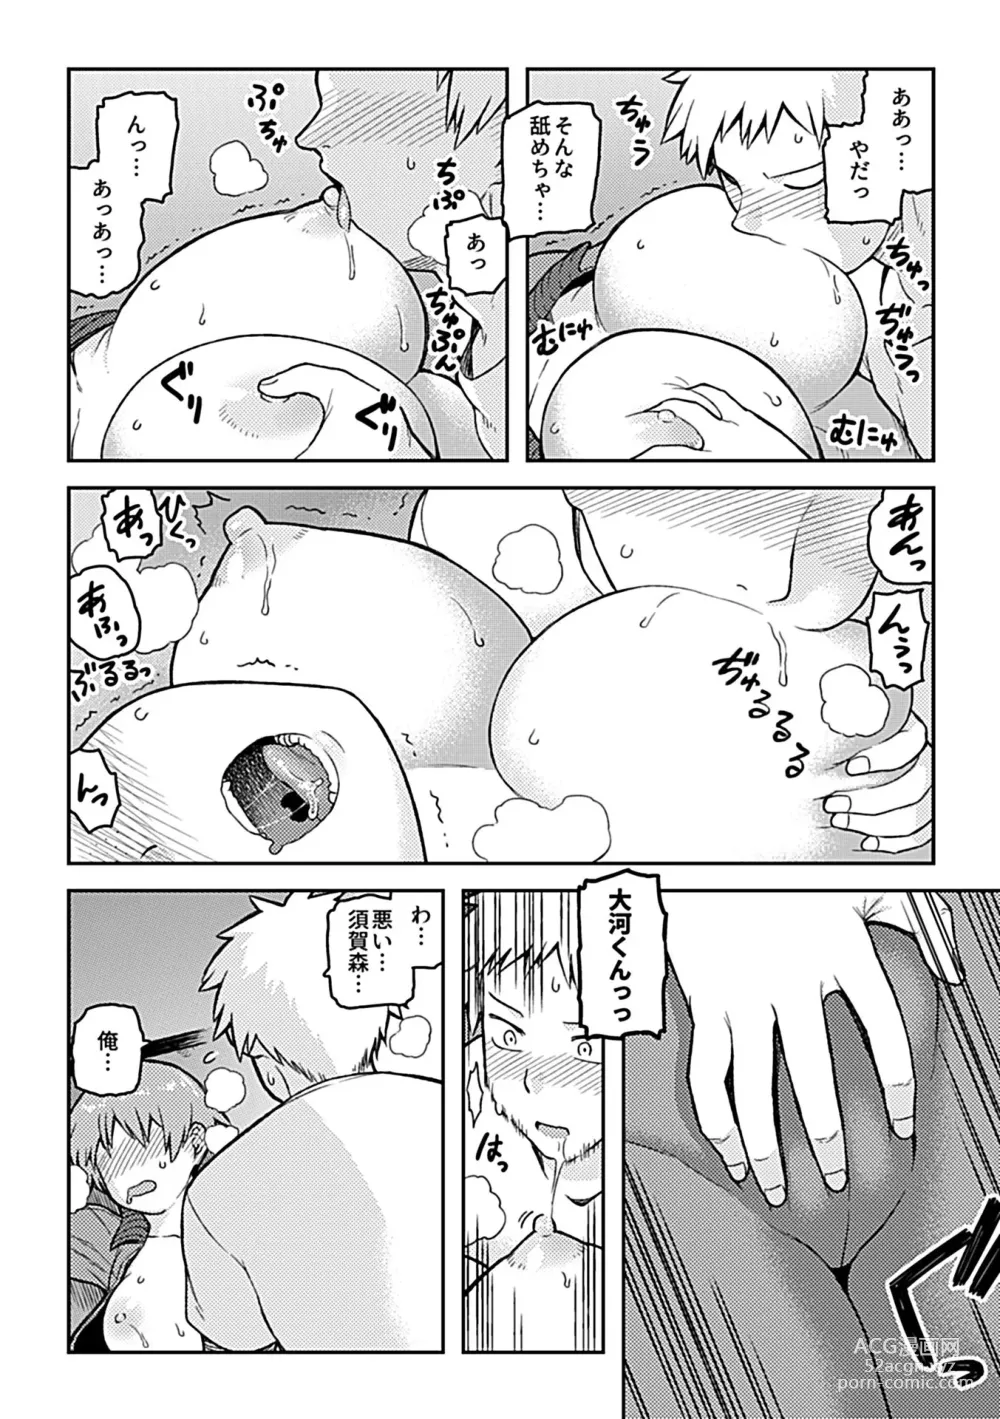 Page 18 of manga Aibiki